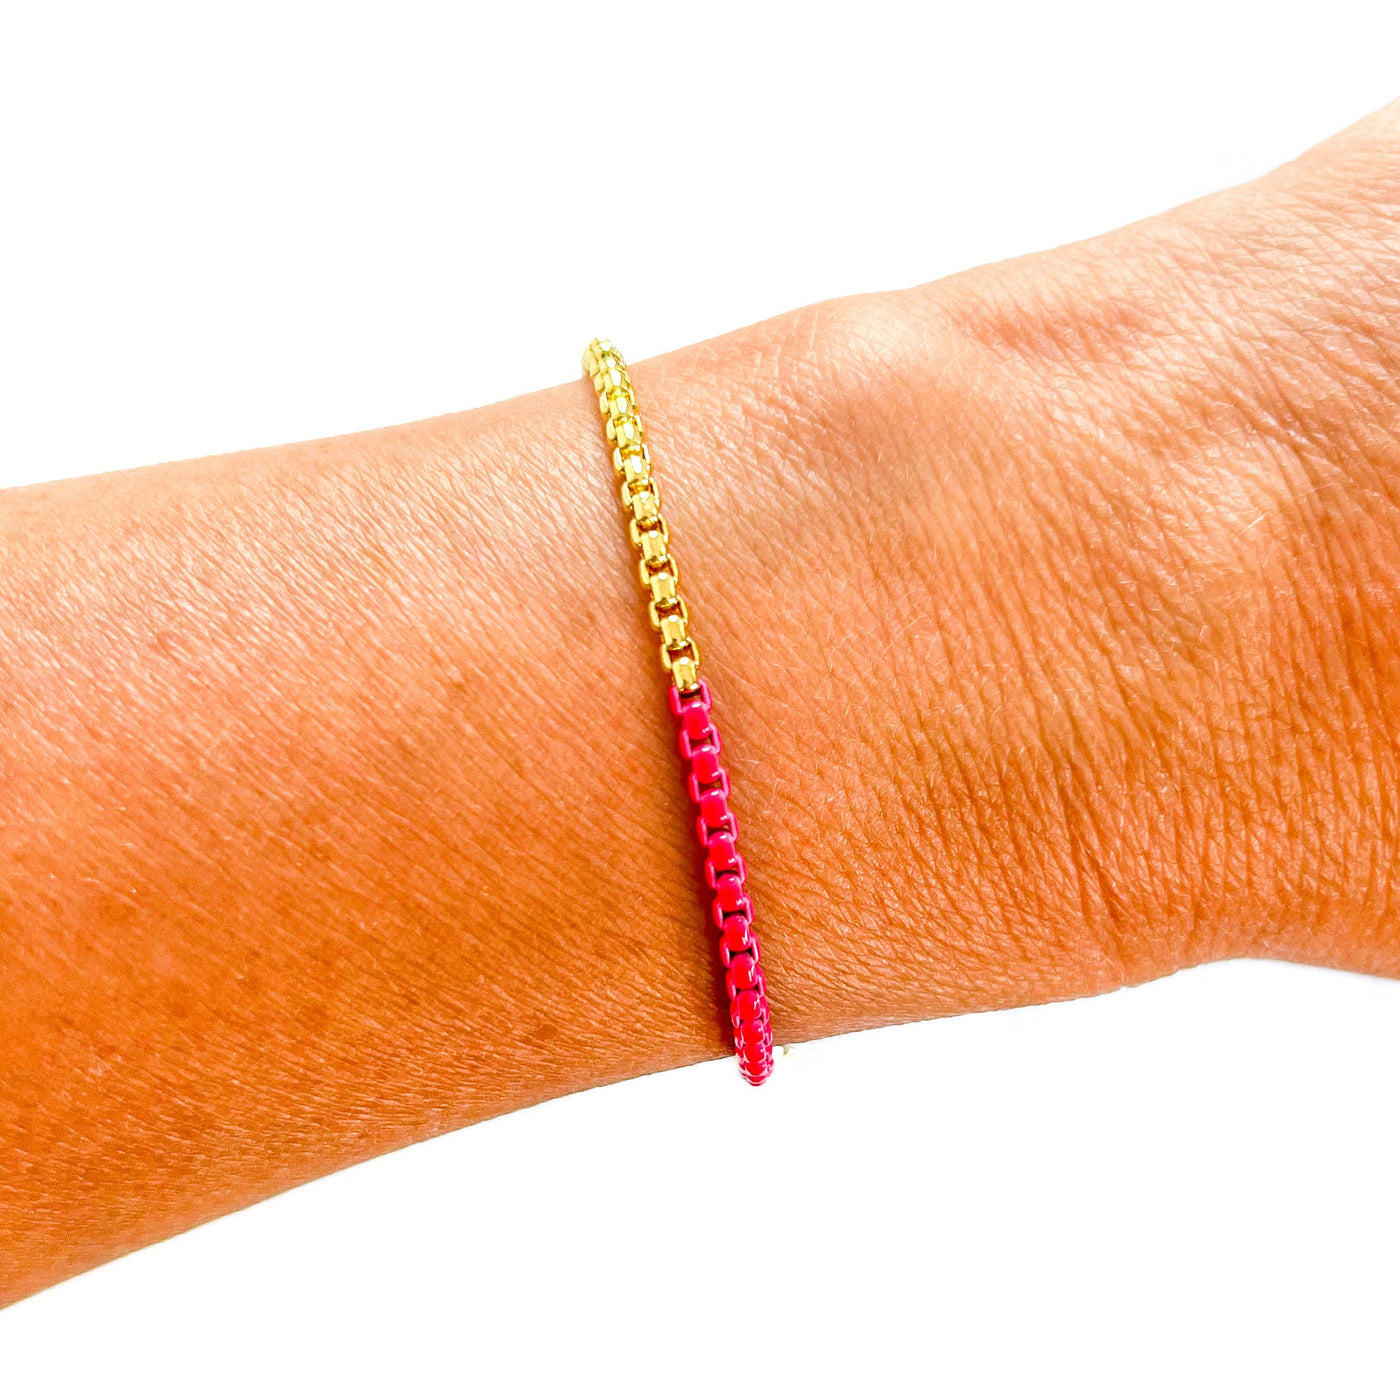 Chain link bracelet - 18K Gold & Neon Pink